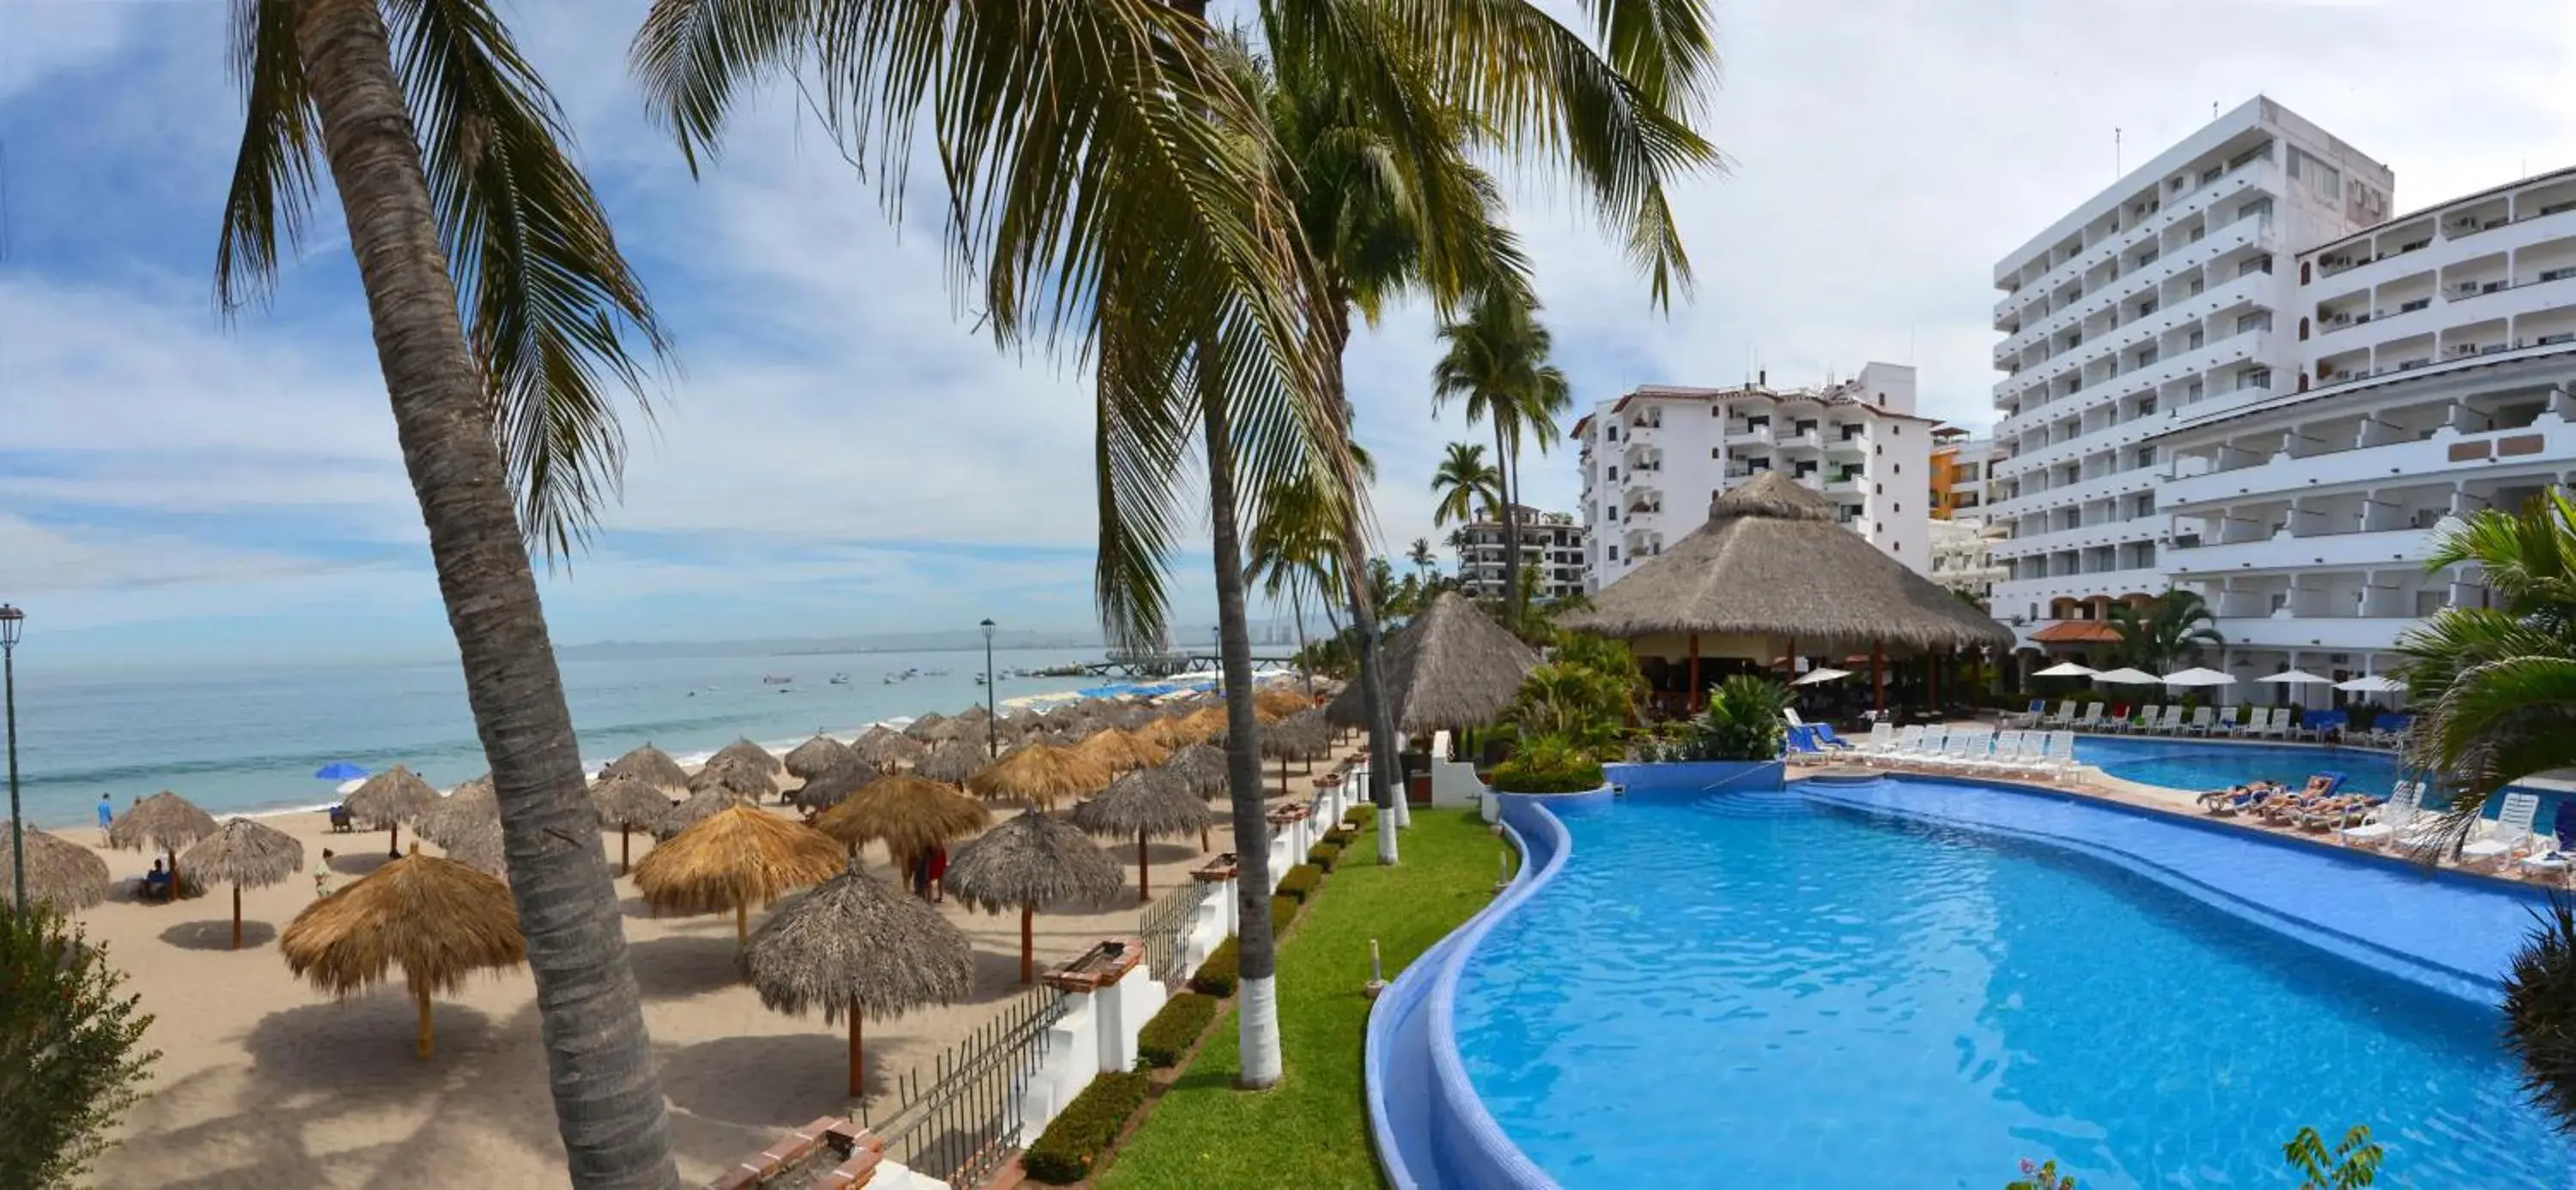 Day, Swimming Pool in Tropicana Hotel Puerto Vallarta